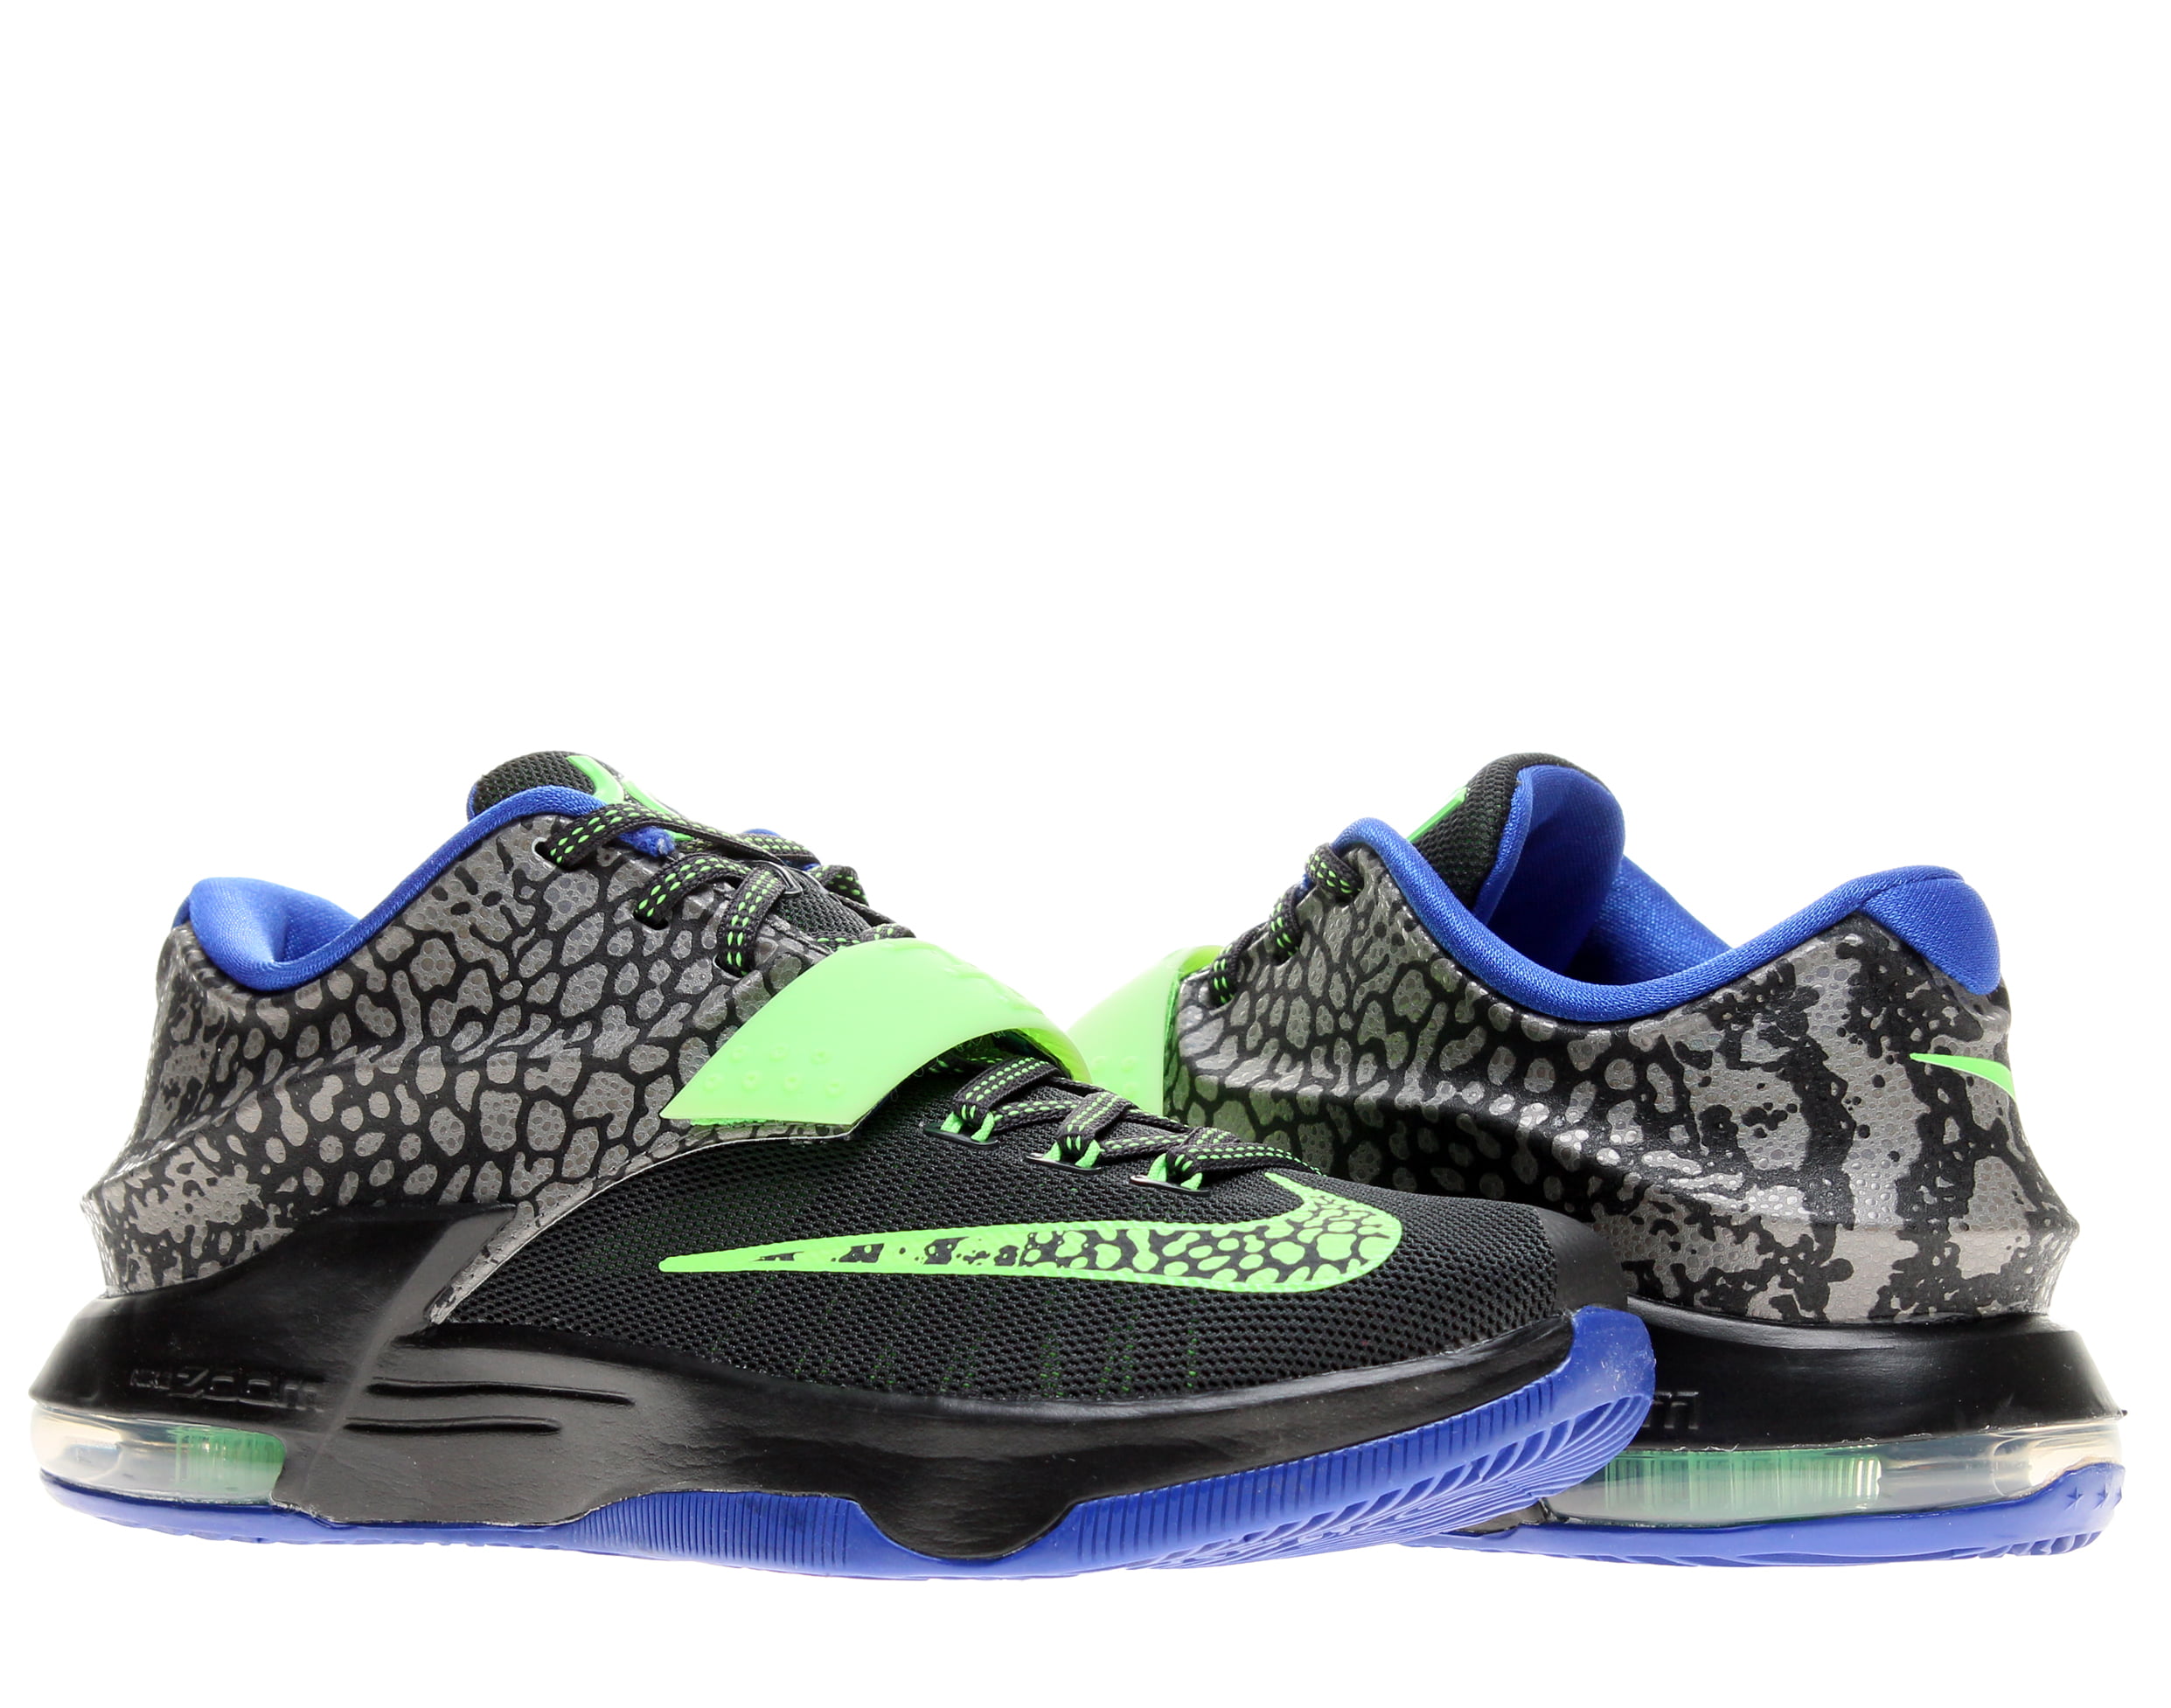 Nike KD "Electric Eel" Men's Shoes Metallic Lime-Anthracite-Lyon Blue 653996-030 - Walmart.com